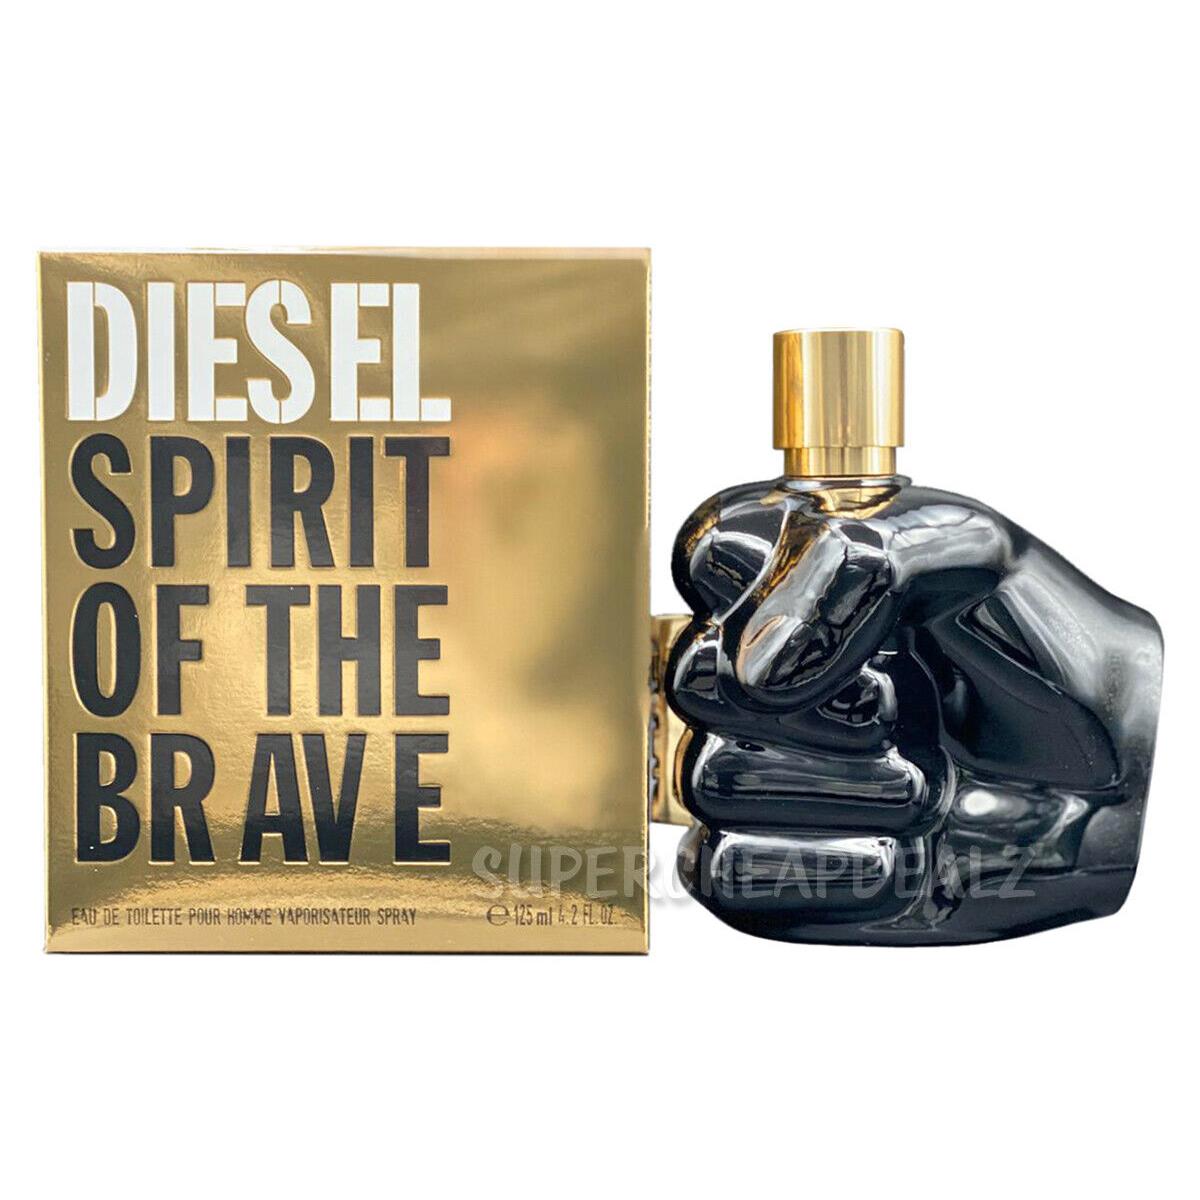 Diesel Spirit of The Brave by Diesel For Men 4.2 oz Edt Spray